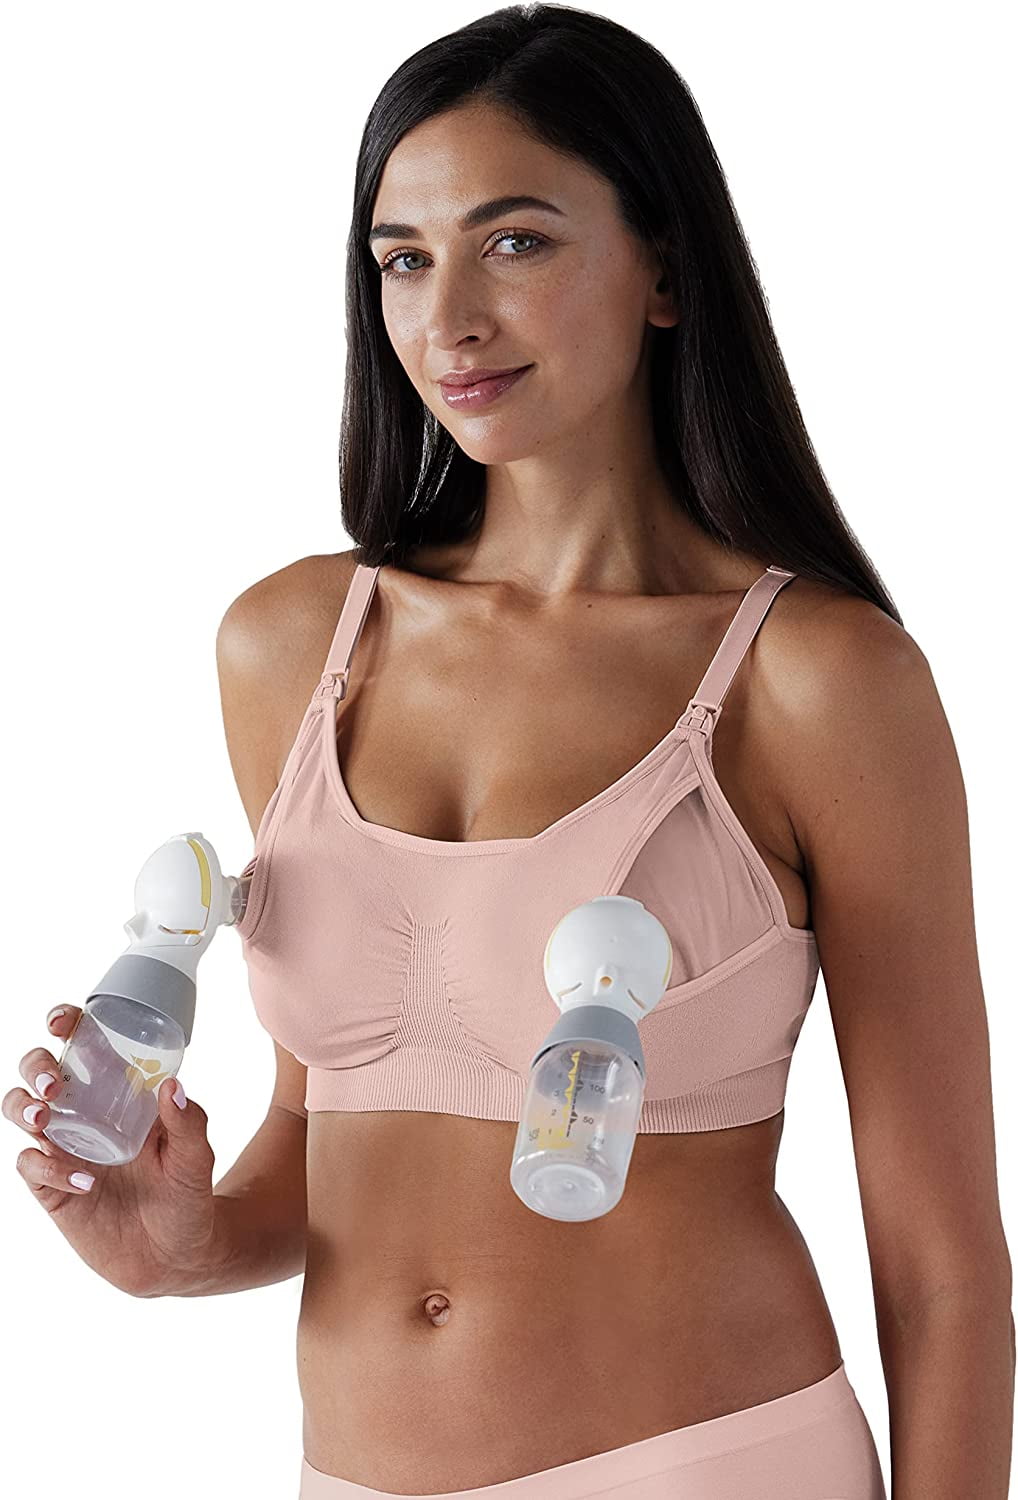 4HOW Pumping Bra Hands-Free, Breast Pump Bra,Nursing Bras for  Breastfeeding,Adjustable Breast-Pumps Holding and Nursing Bra at   Women's Clothing store